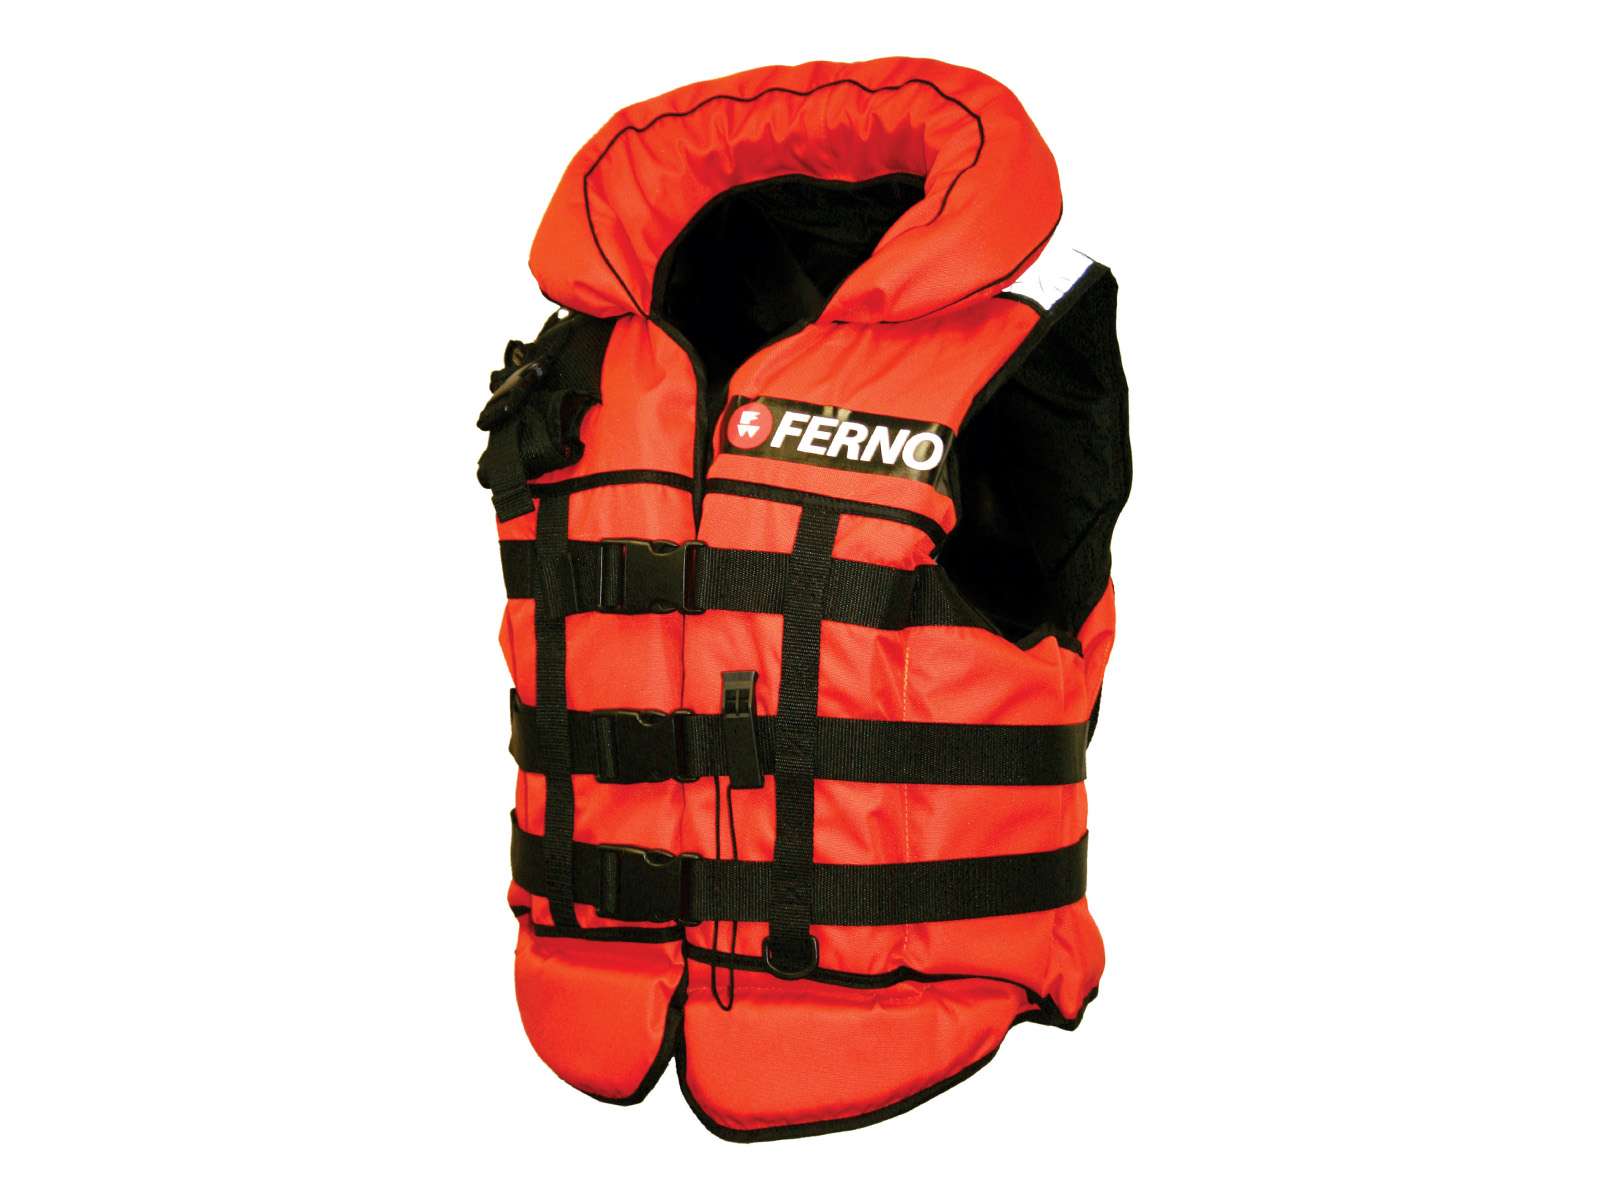 Ferno Raider Level 100 PFD